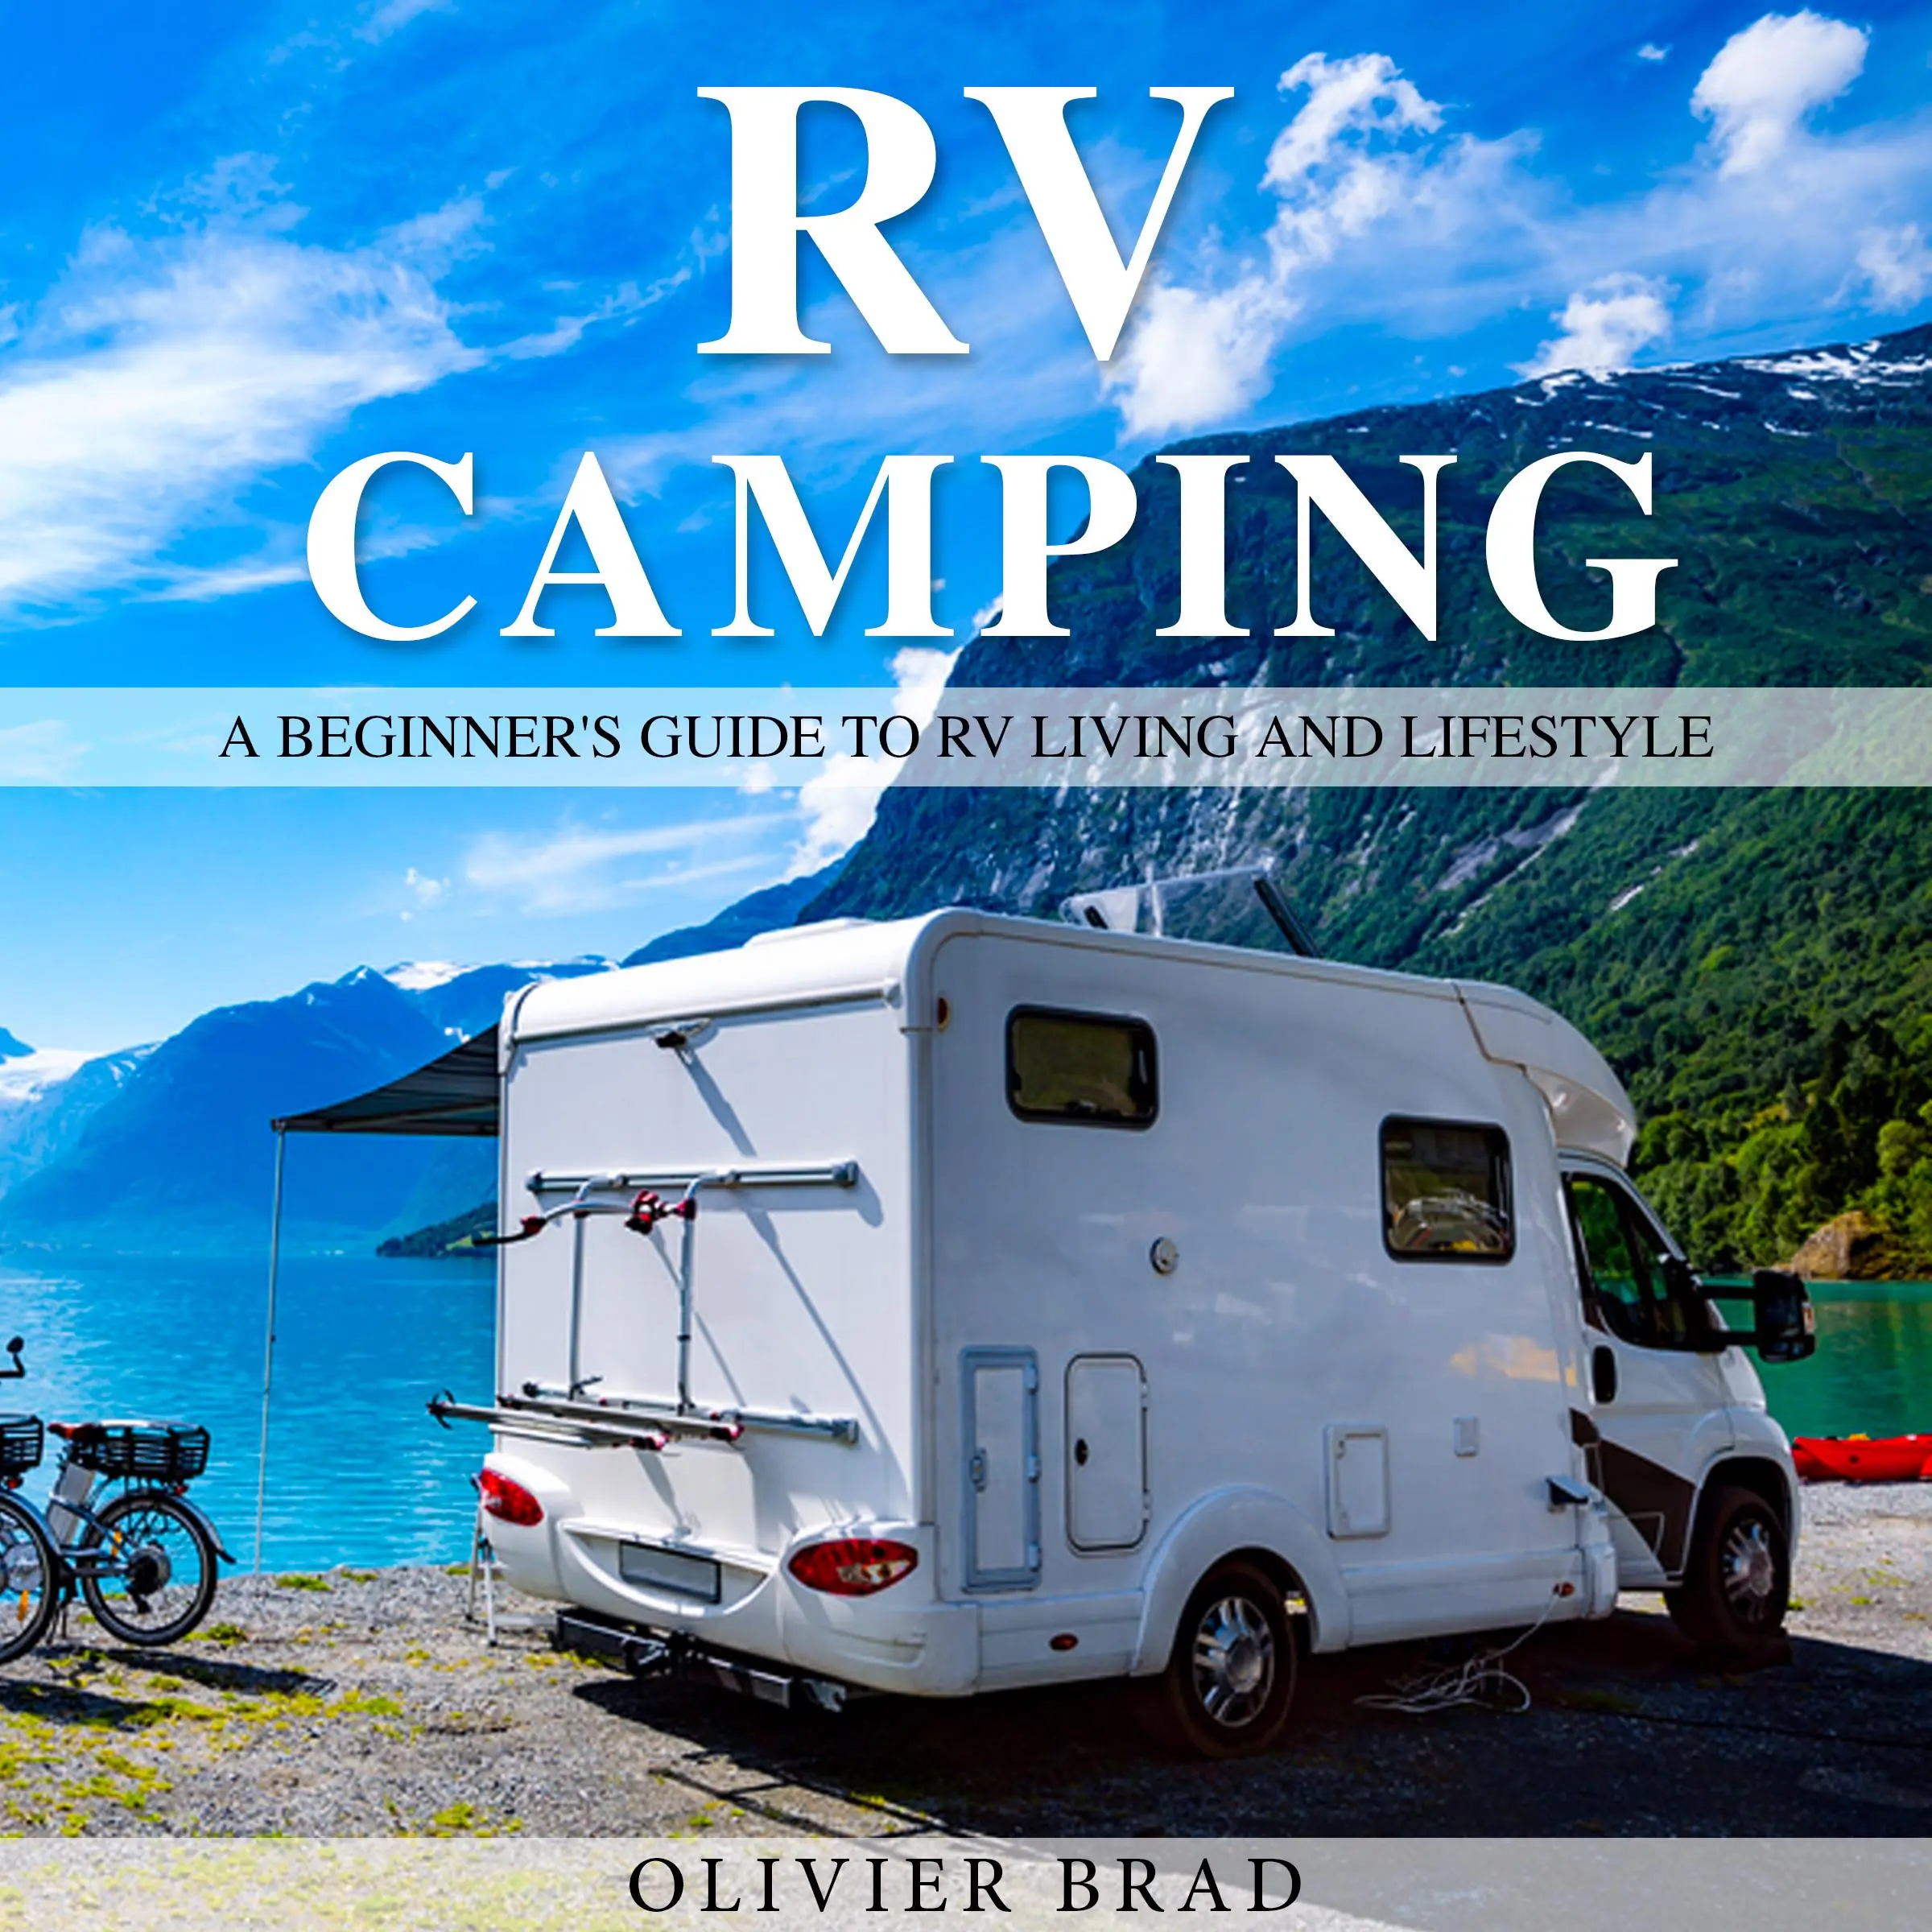 RV Camping by Olivier Brad Audiobook